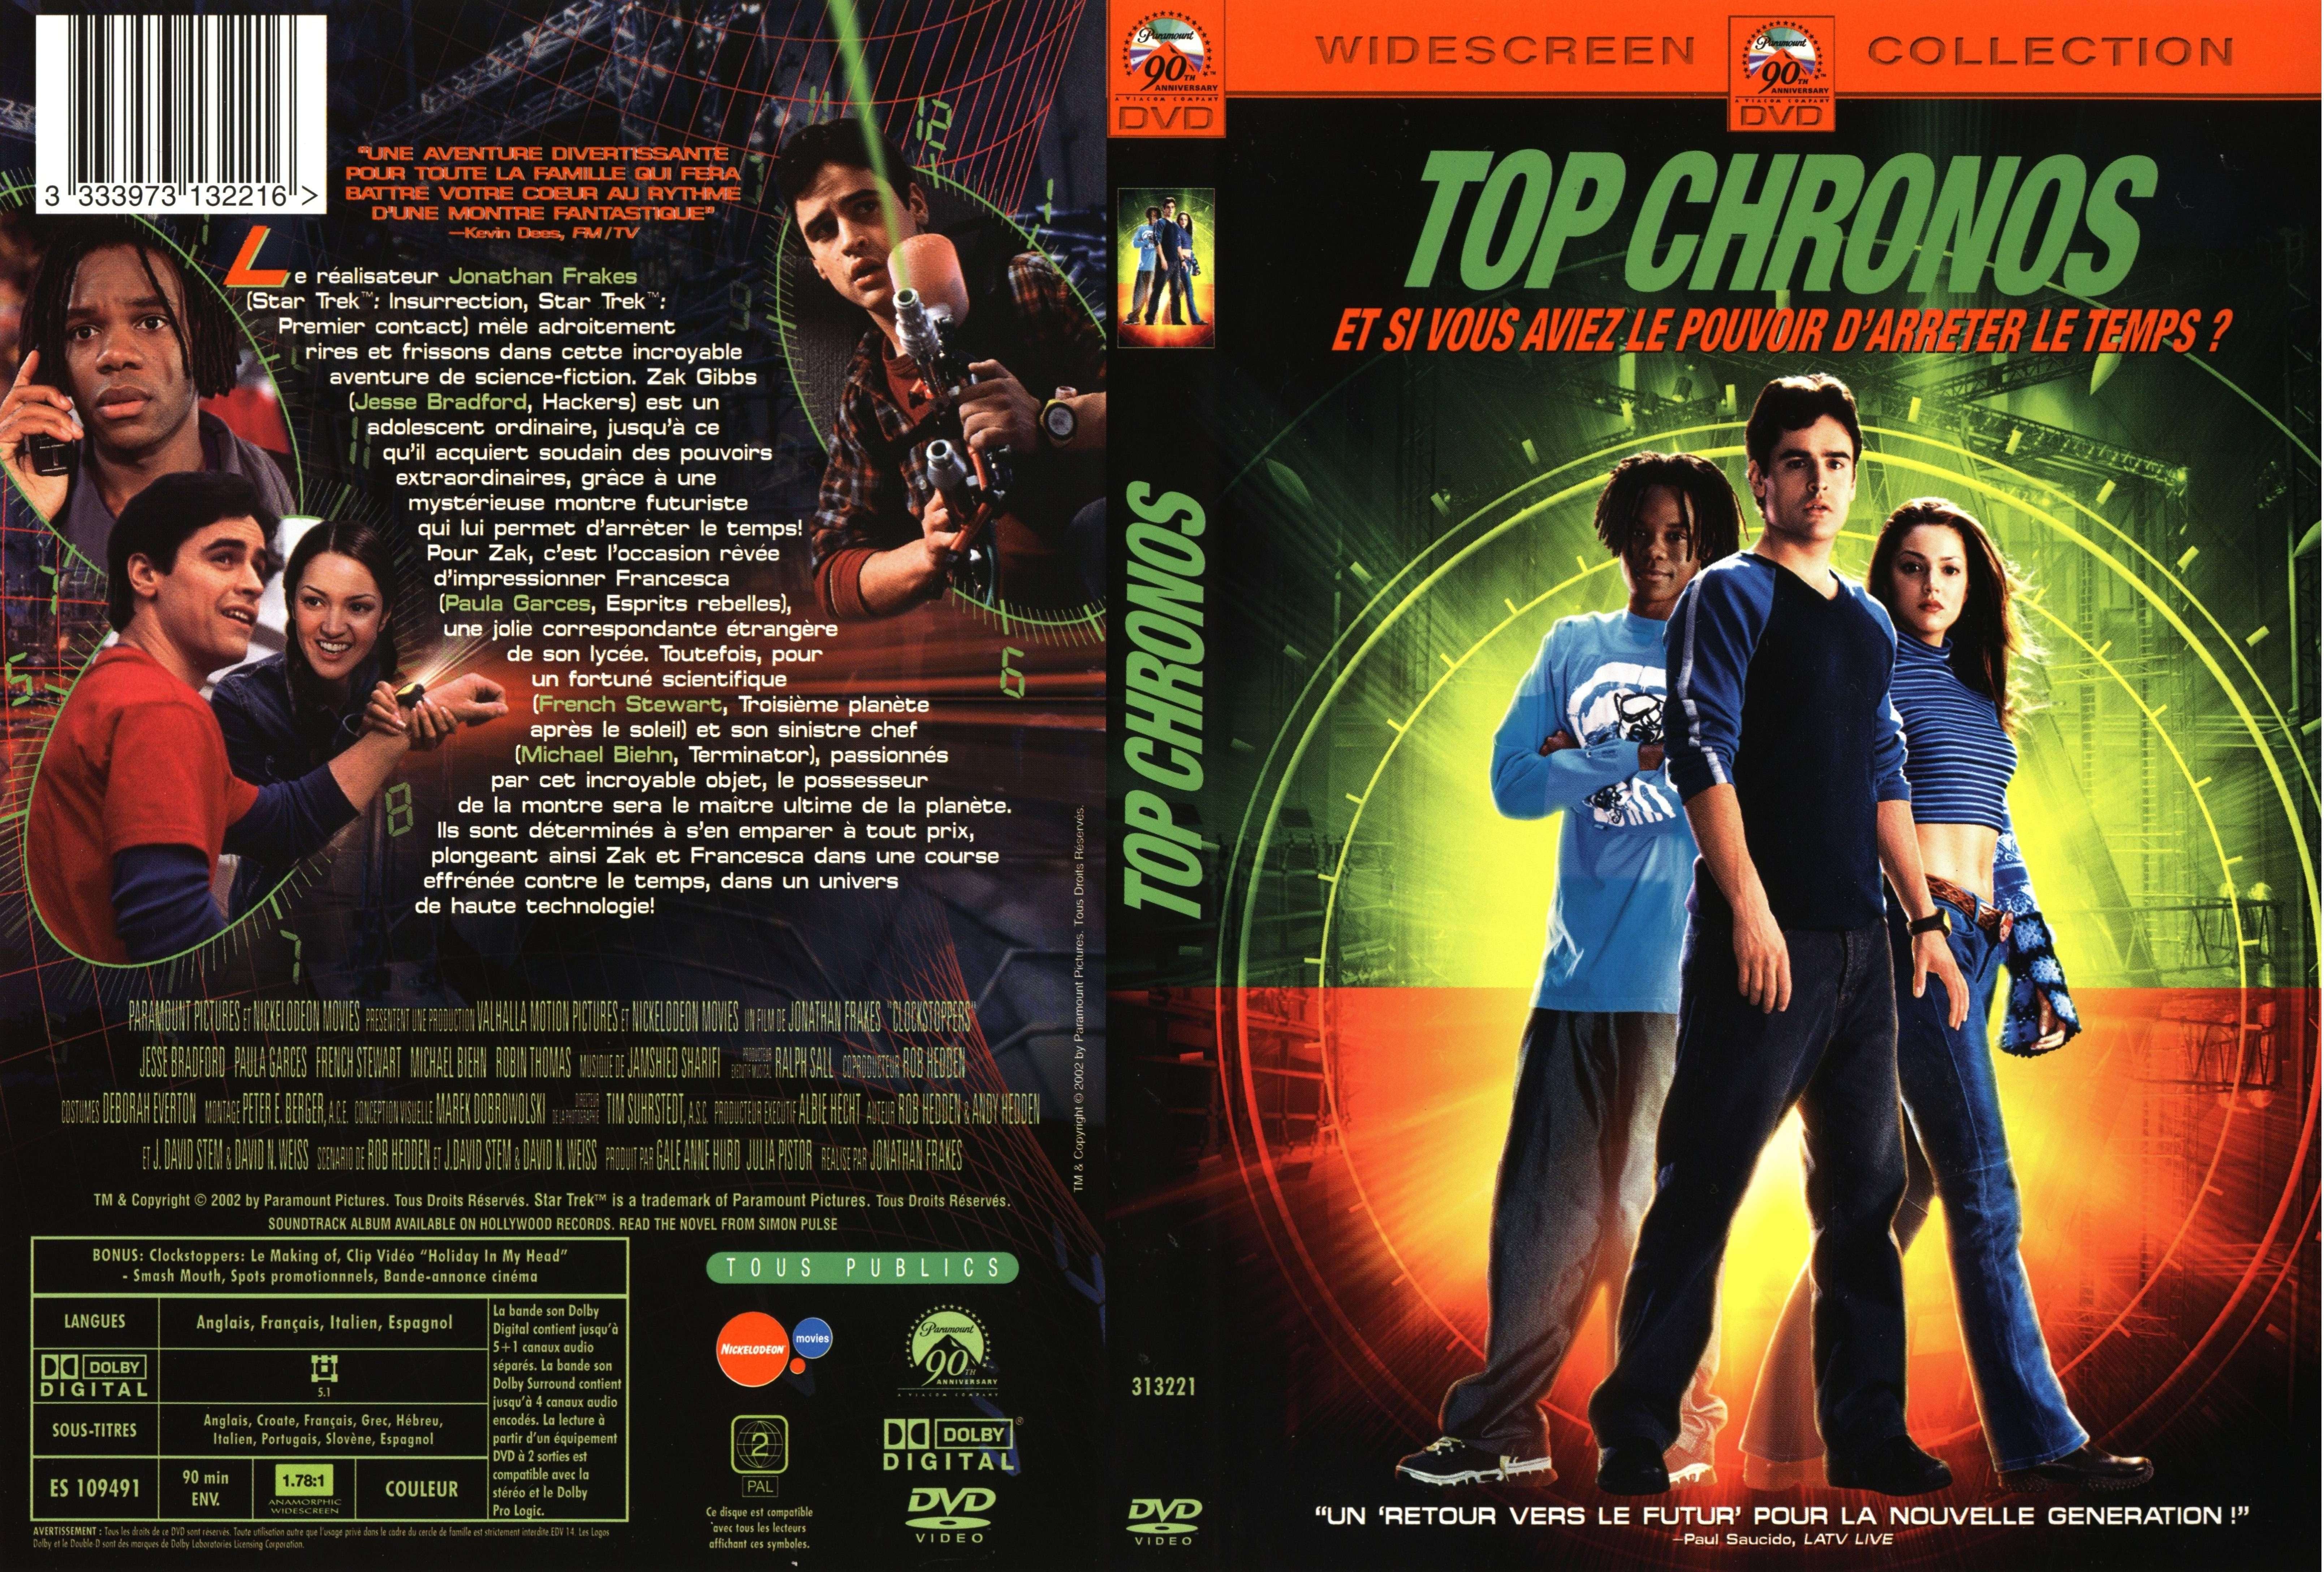 Jaquette DVD Top chronos